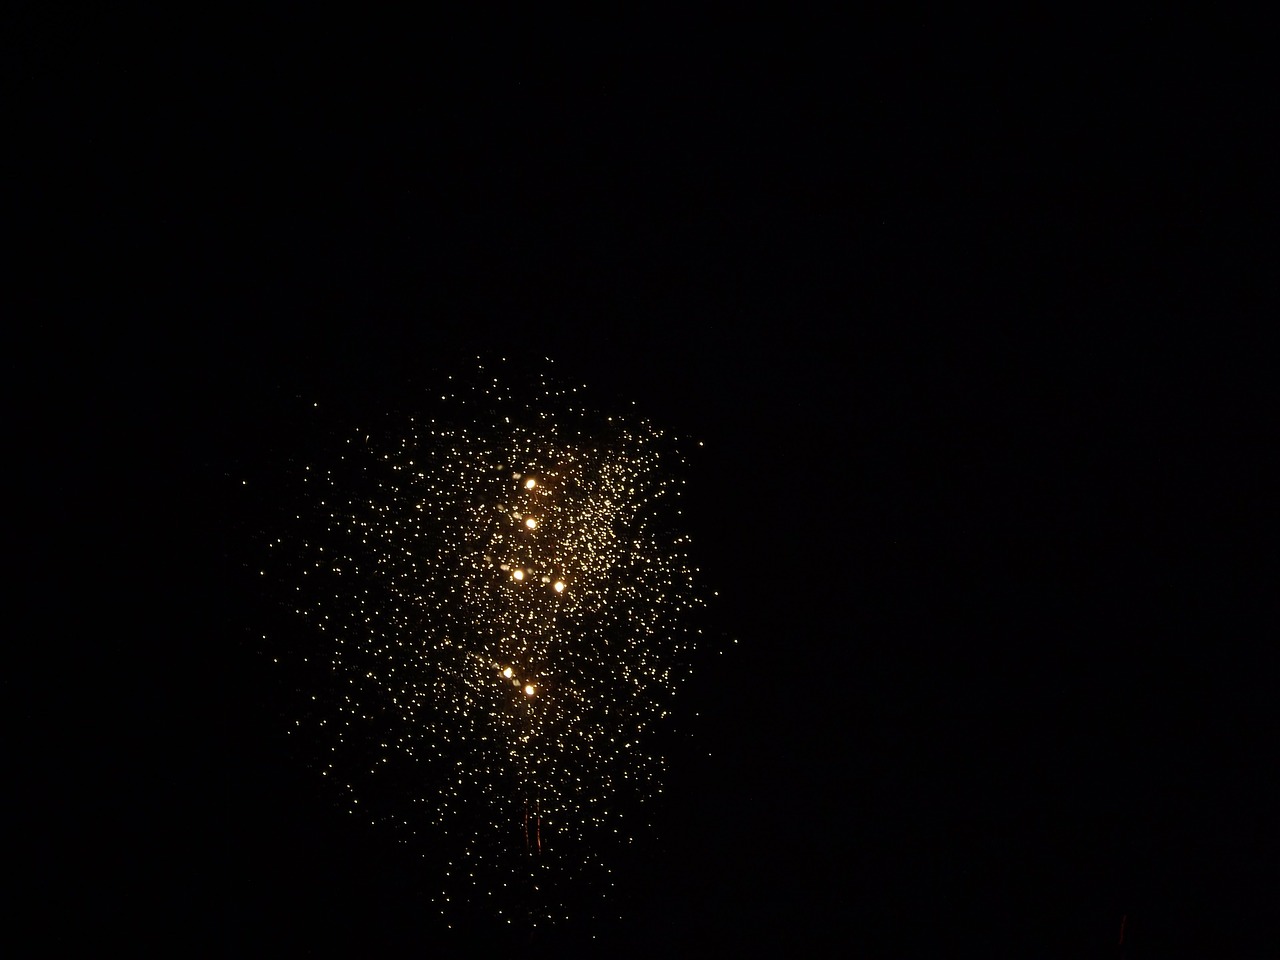 sylvester fireworks 2013 free photo